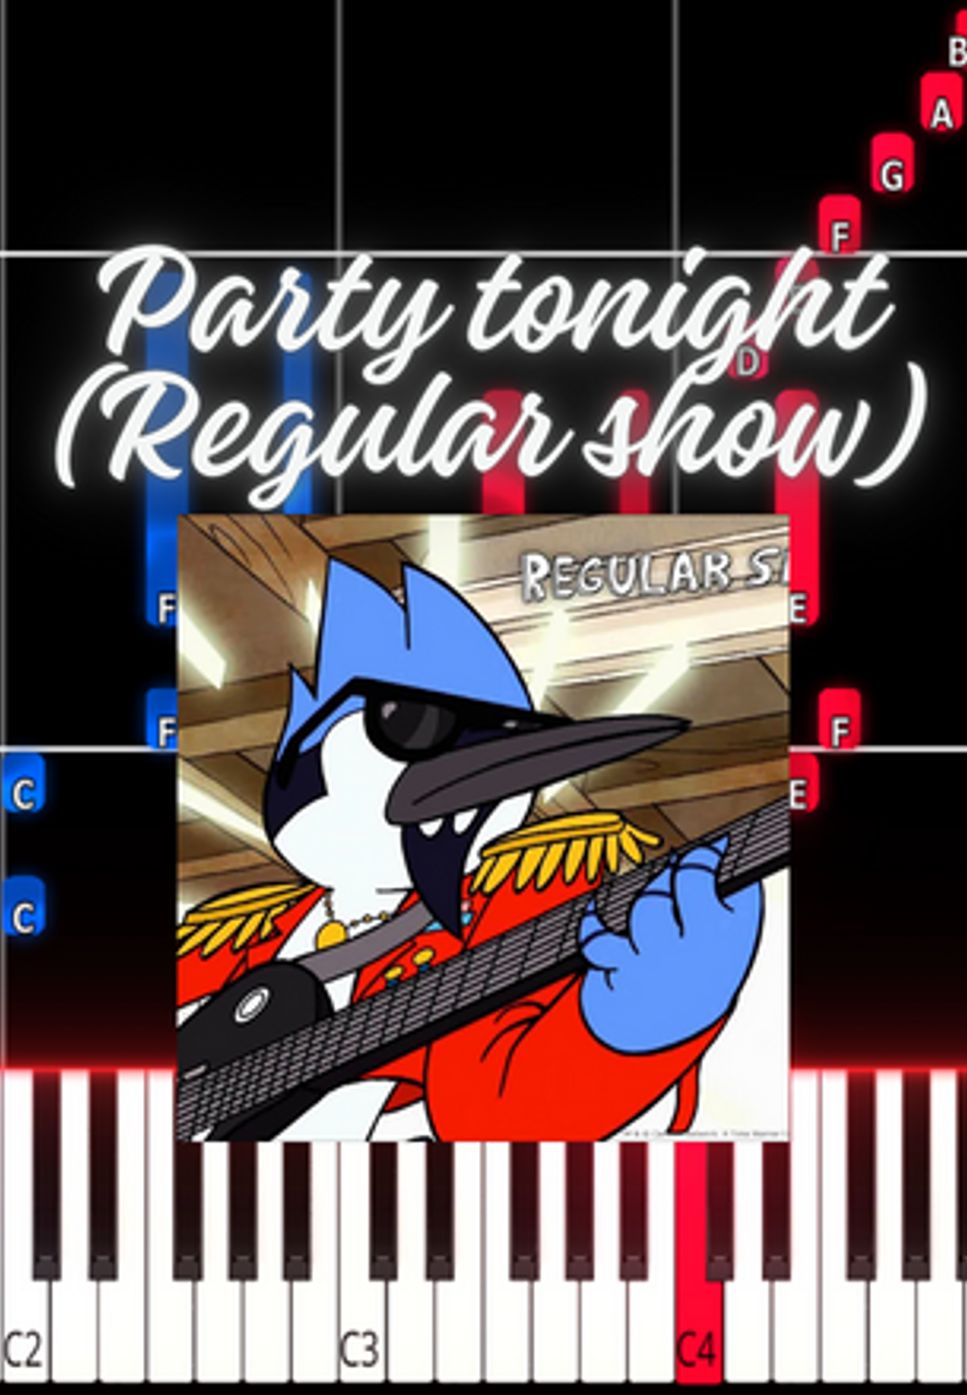 Sean Szeles - Party tonight (Regular show) by Marco D.